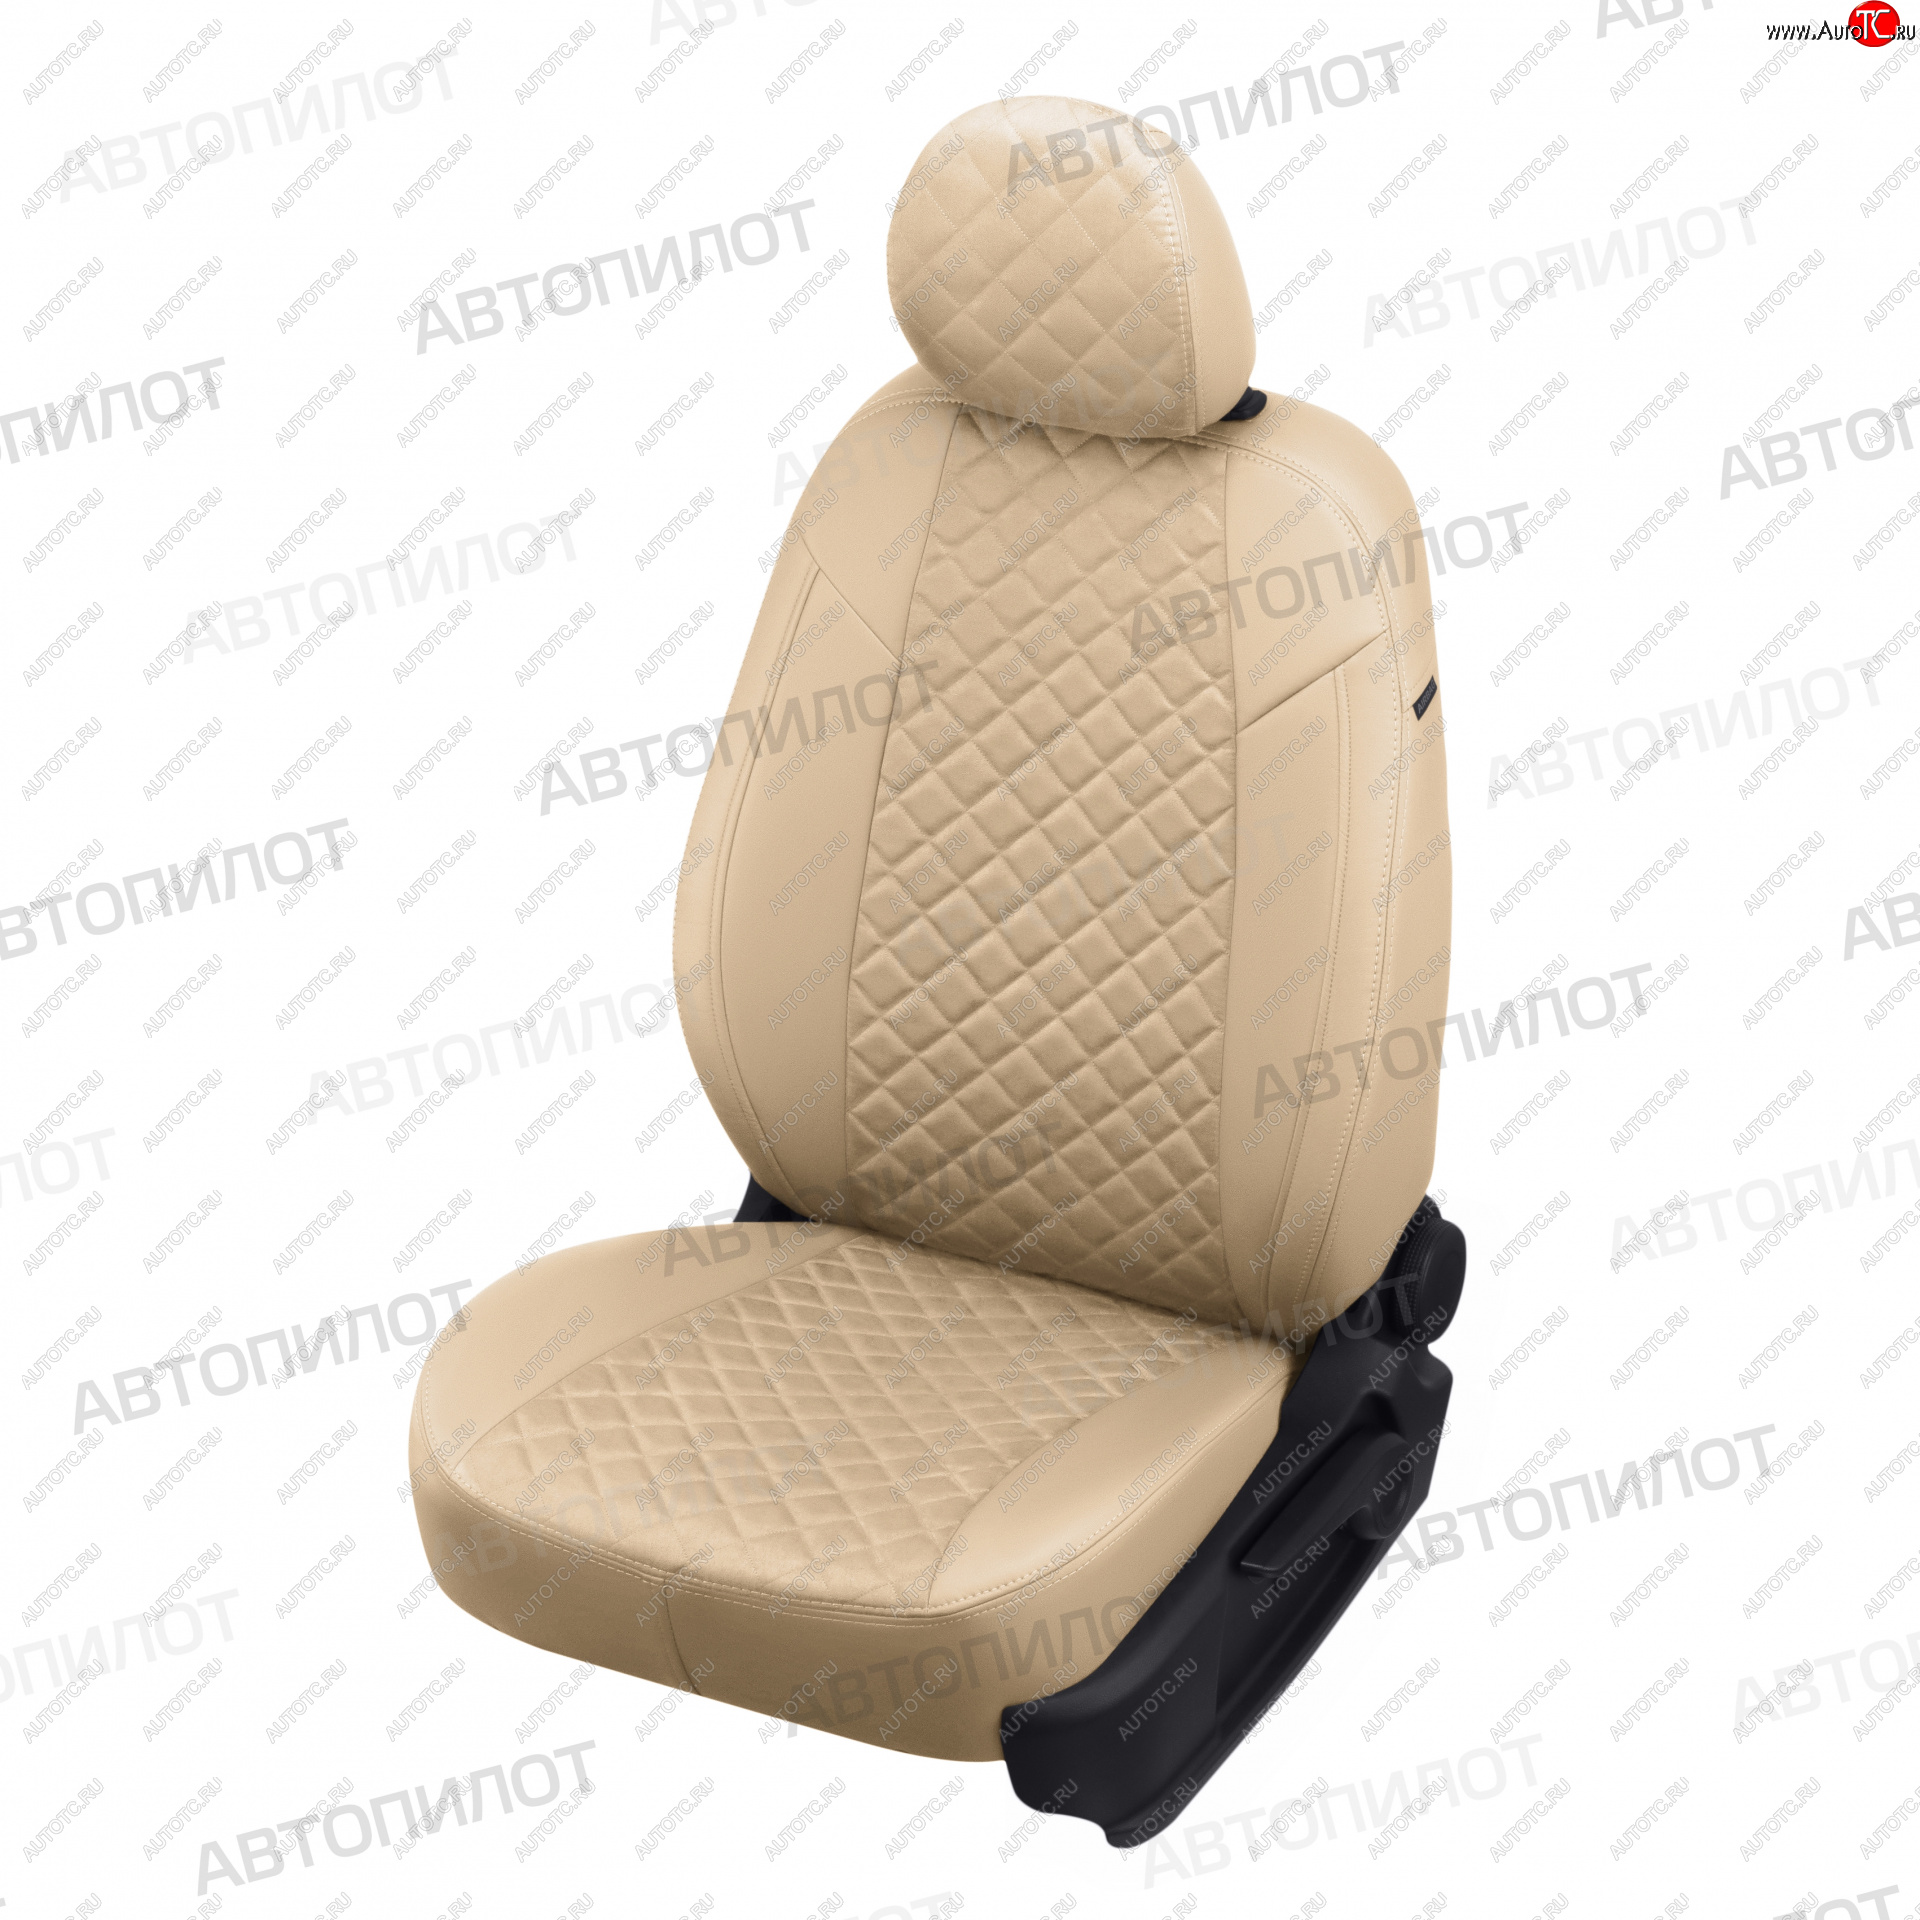 13 999 р. Чехлы сидений (экокожа/алькантара) Автопилот Ромб  Hyundai Terracan  1 HP (2001-2007) (бежевый)